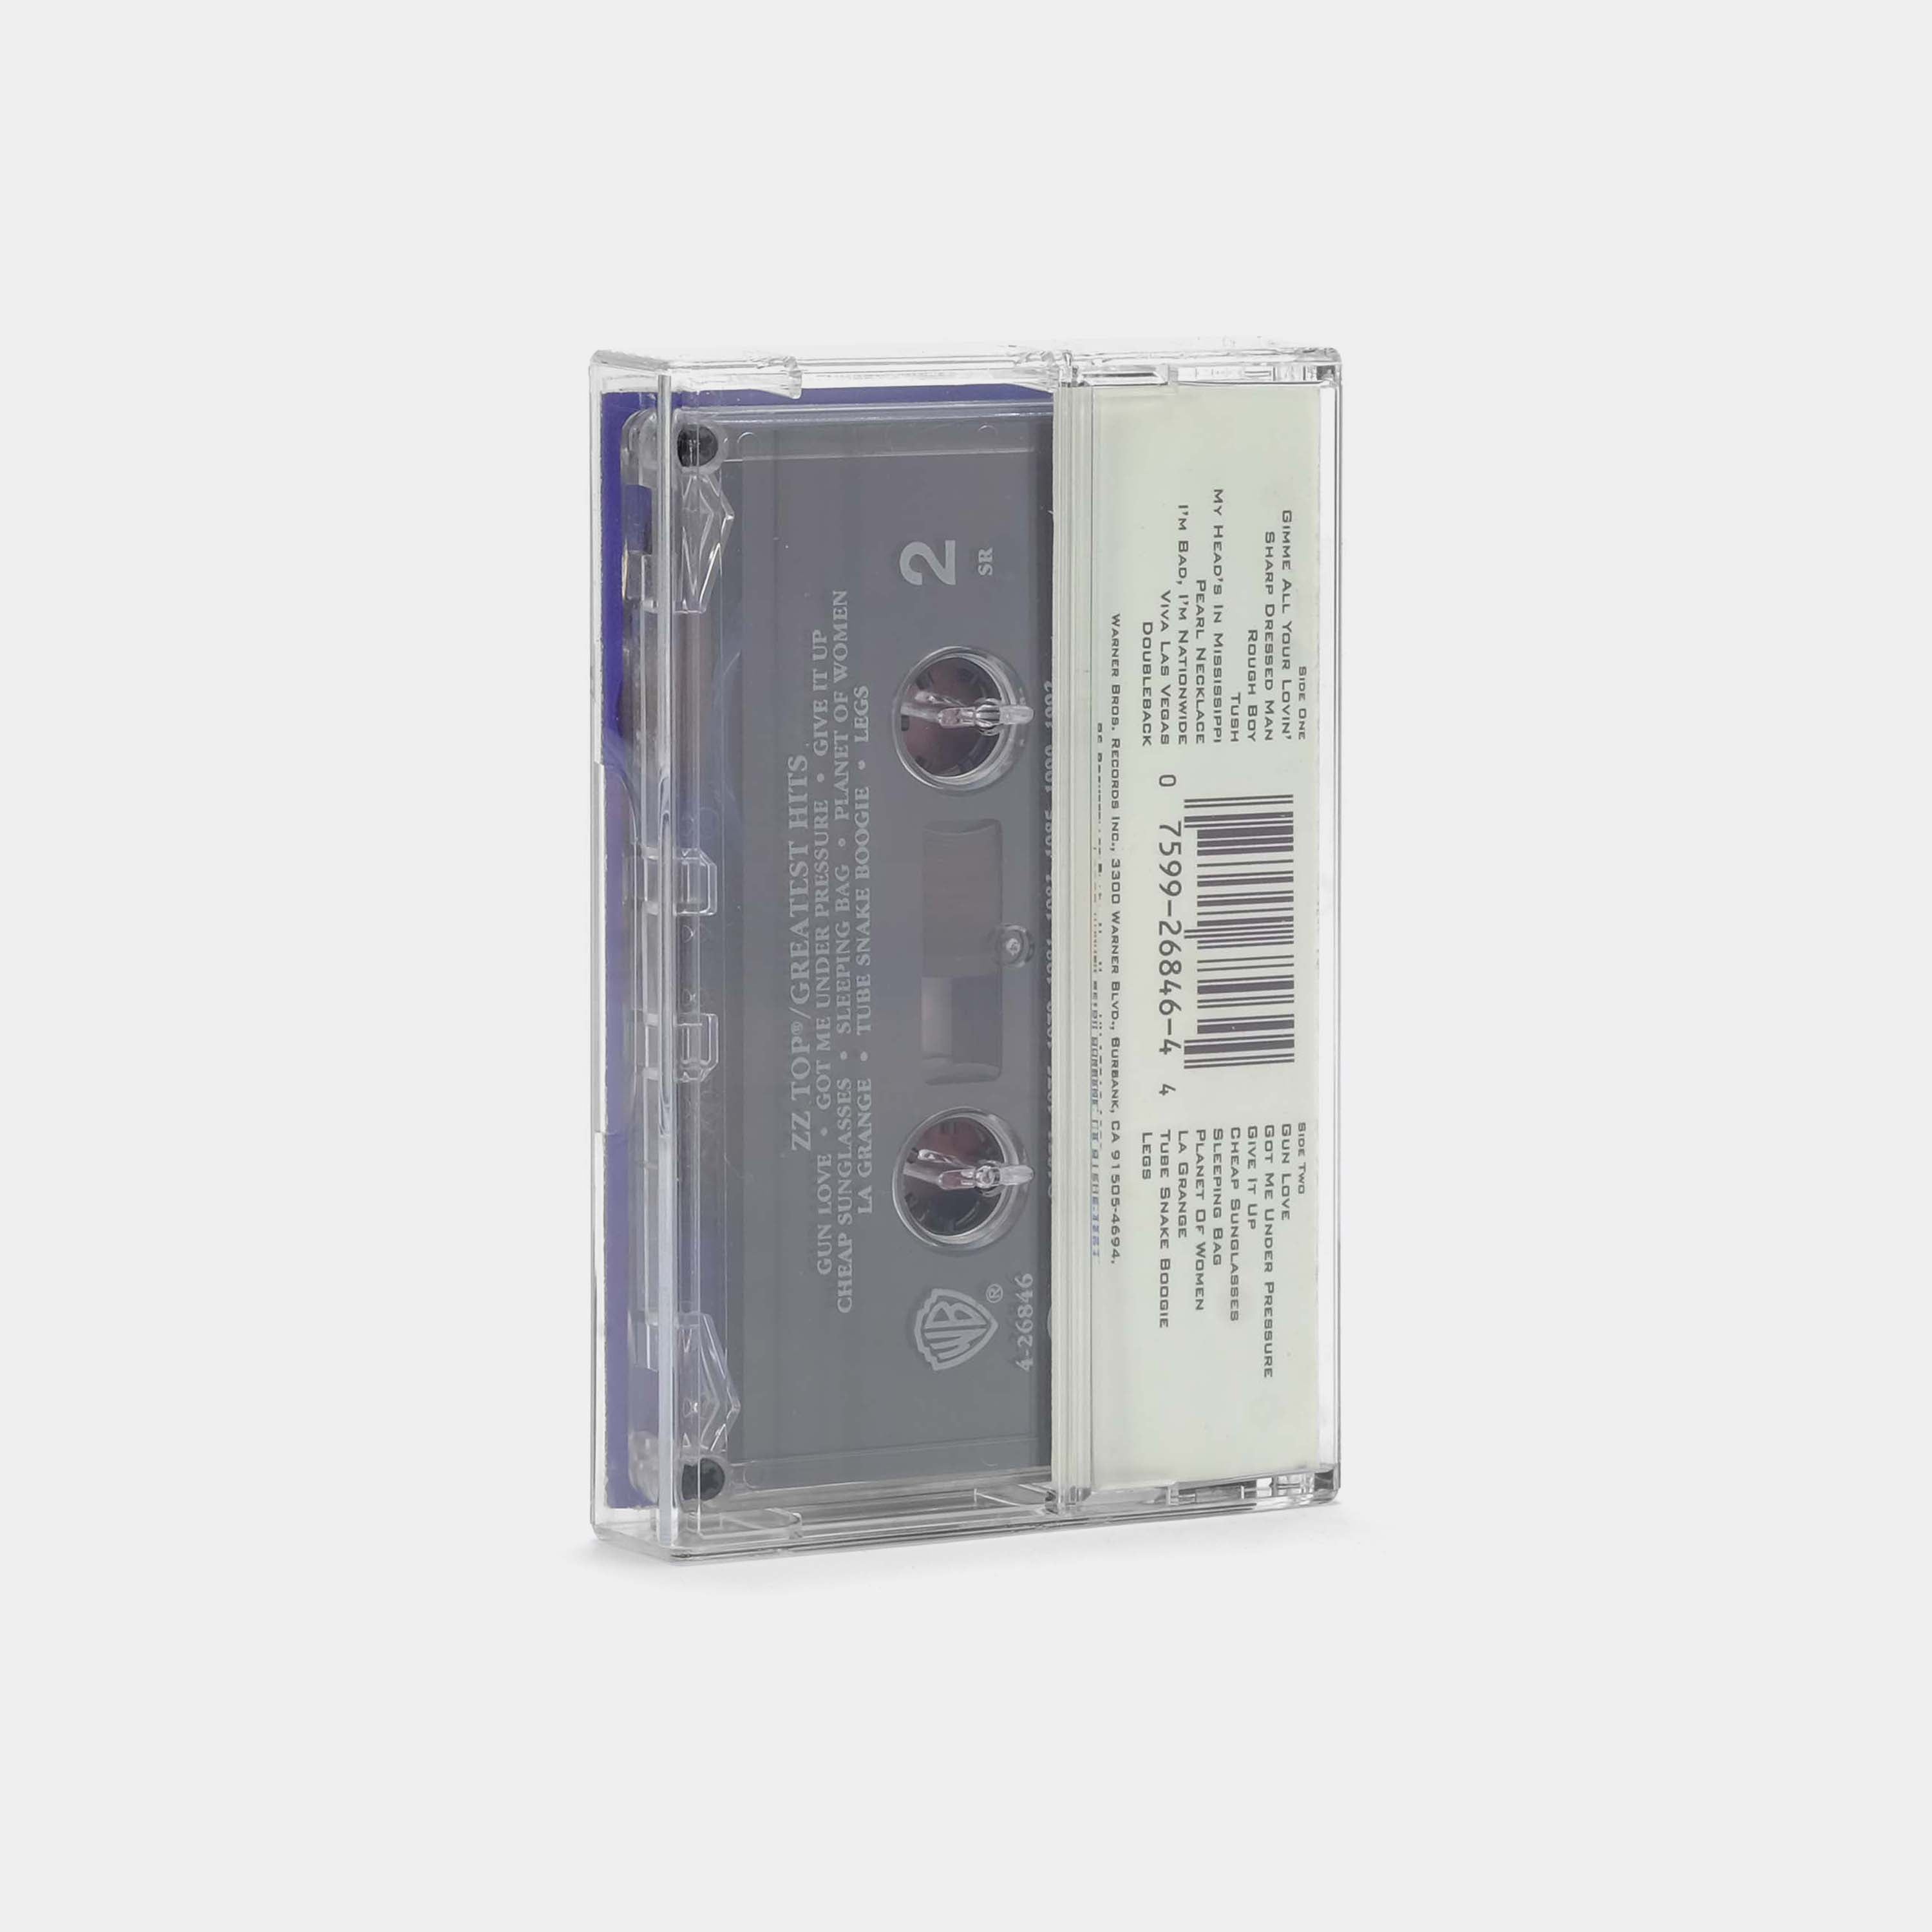 ZZ Top - Greatest Hits Cassette Tape